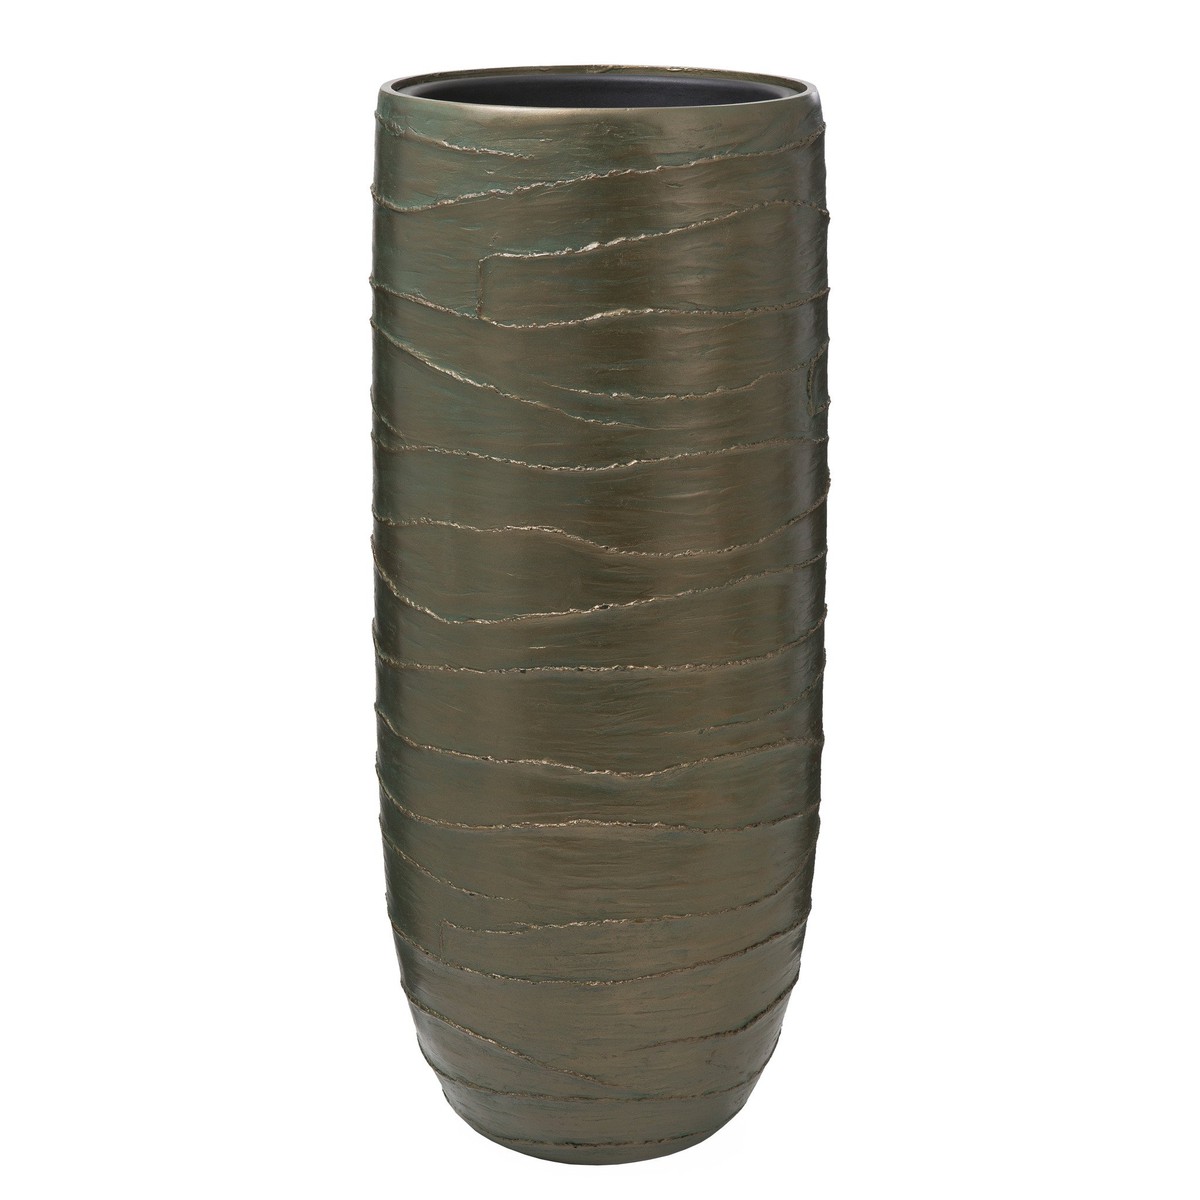   Jersey Vase Ø 31, H 65cm, S1  Ø31/72 bronze